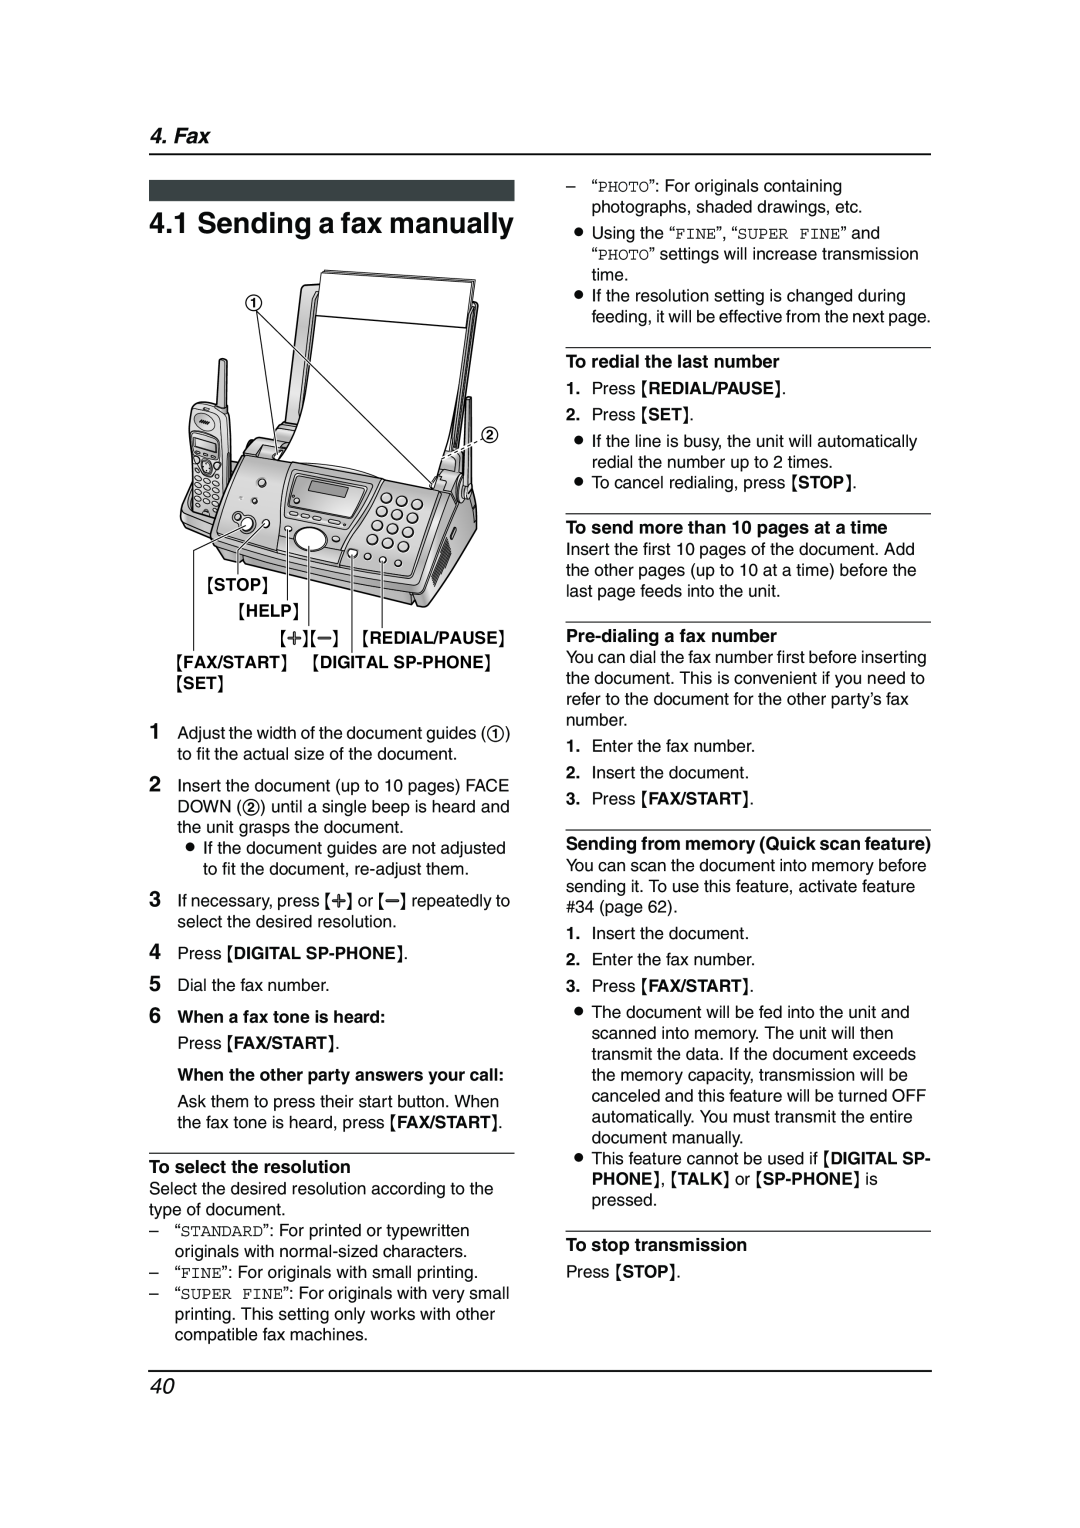 Panasonic KX-FPG376, KX-FPG377 Sending a fax manually, Fax 